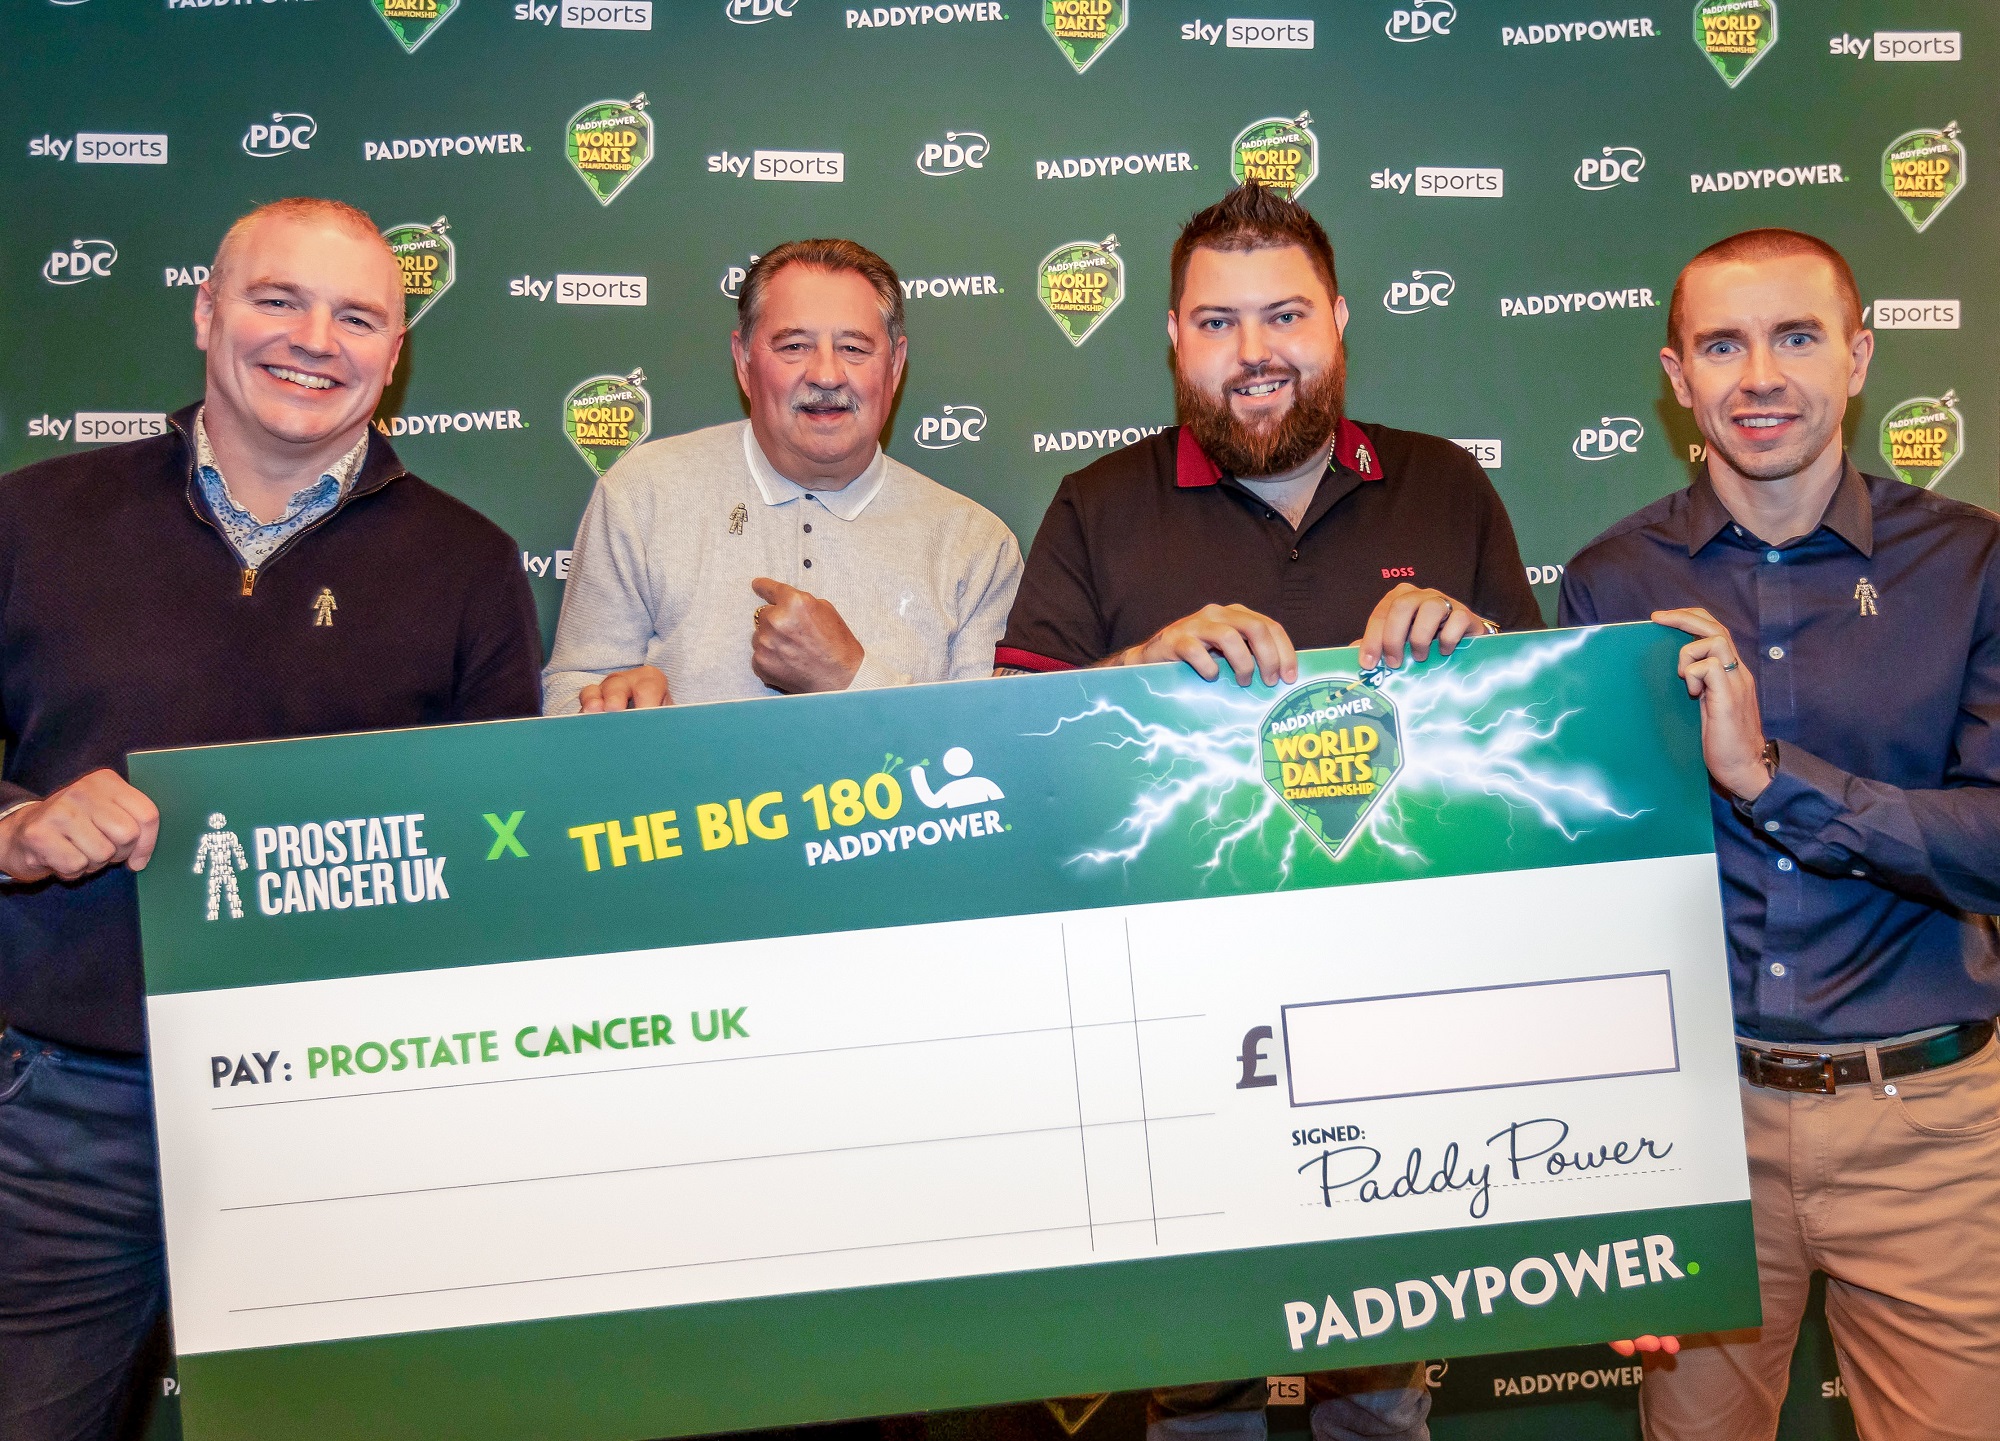 THE BIG 180: Paddy Power reveal Prostate Cancer UK partnership